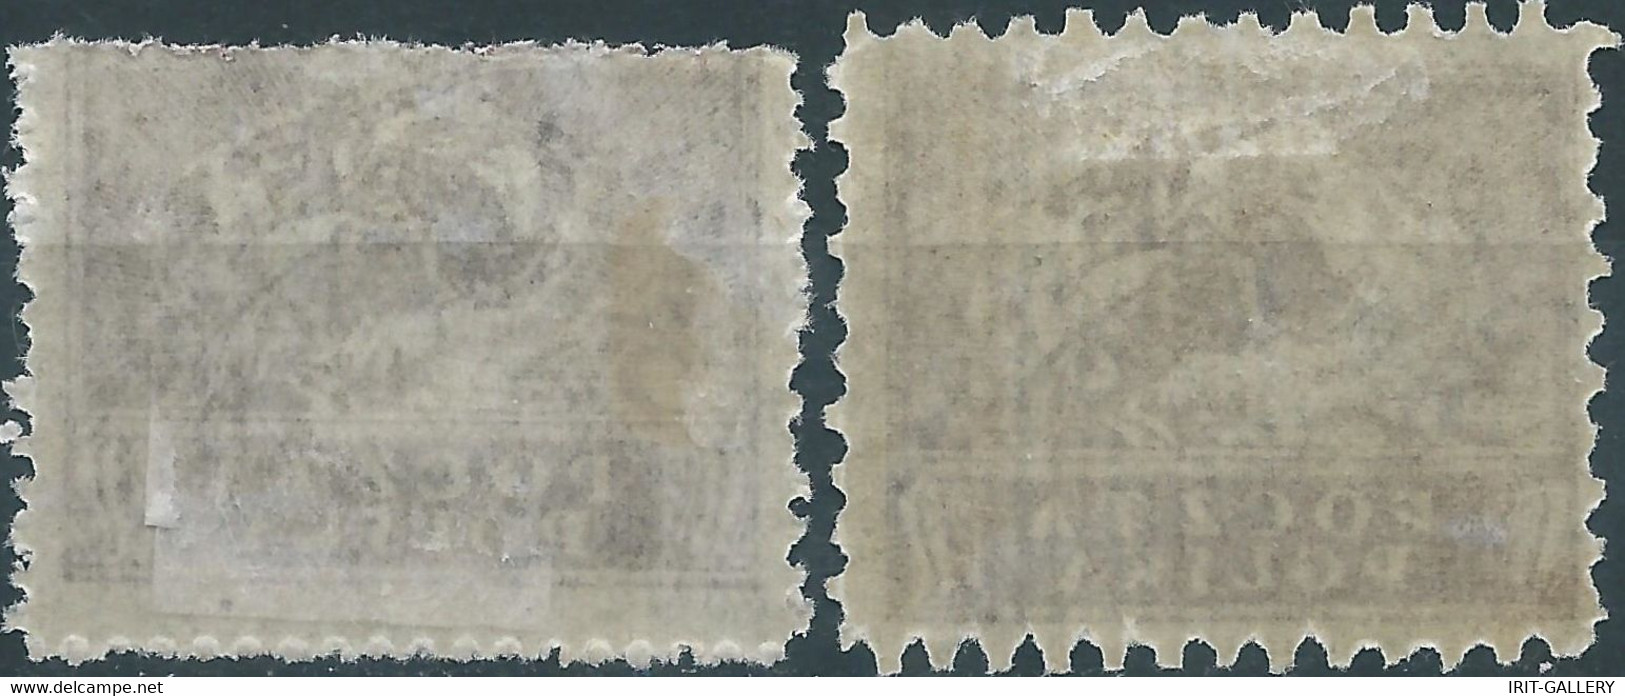 POLONIA-POLAND-POLSKA,1919 North Poland Issues,2x 5M Violet,Mint - Ungebraucht